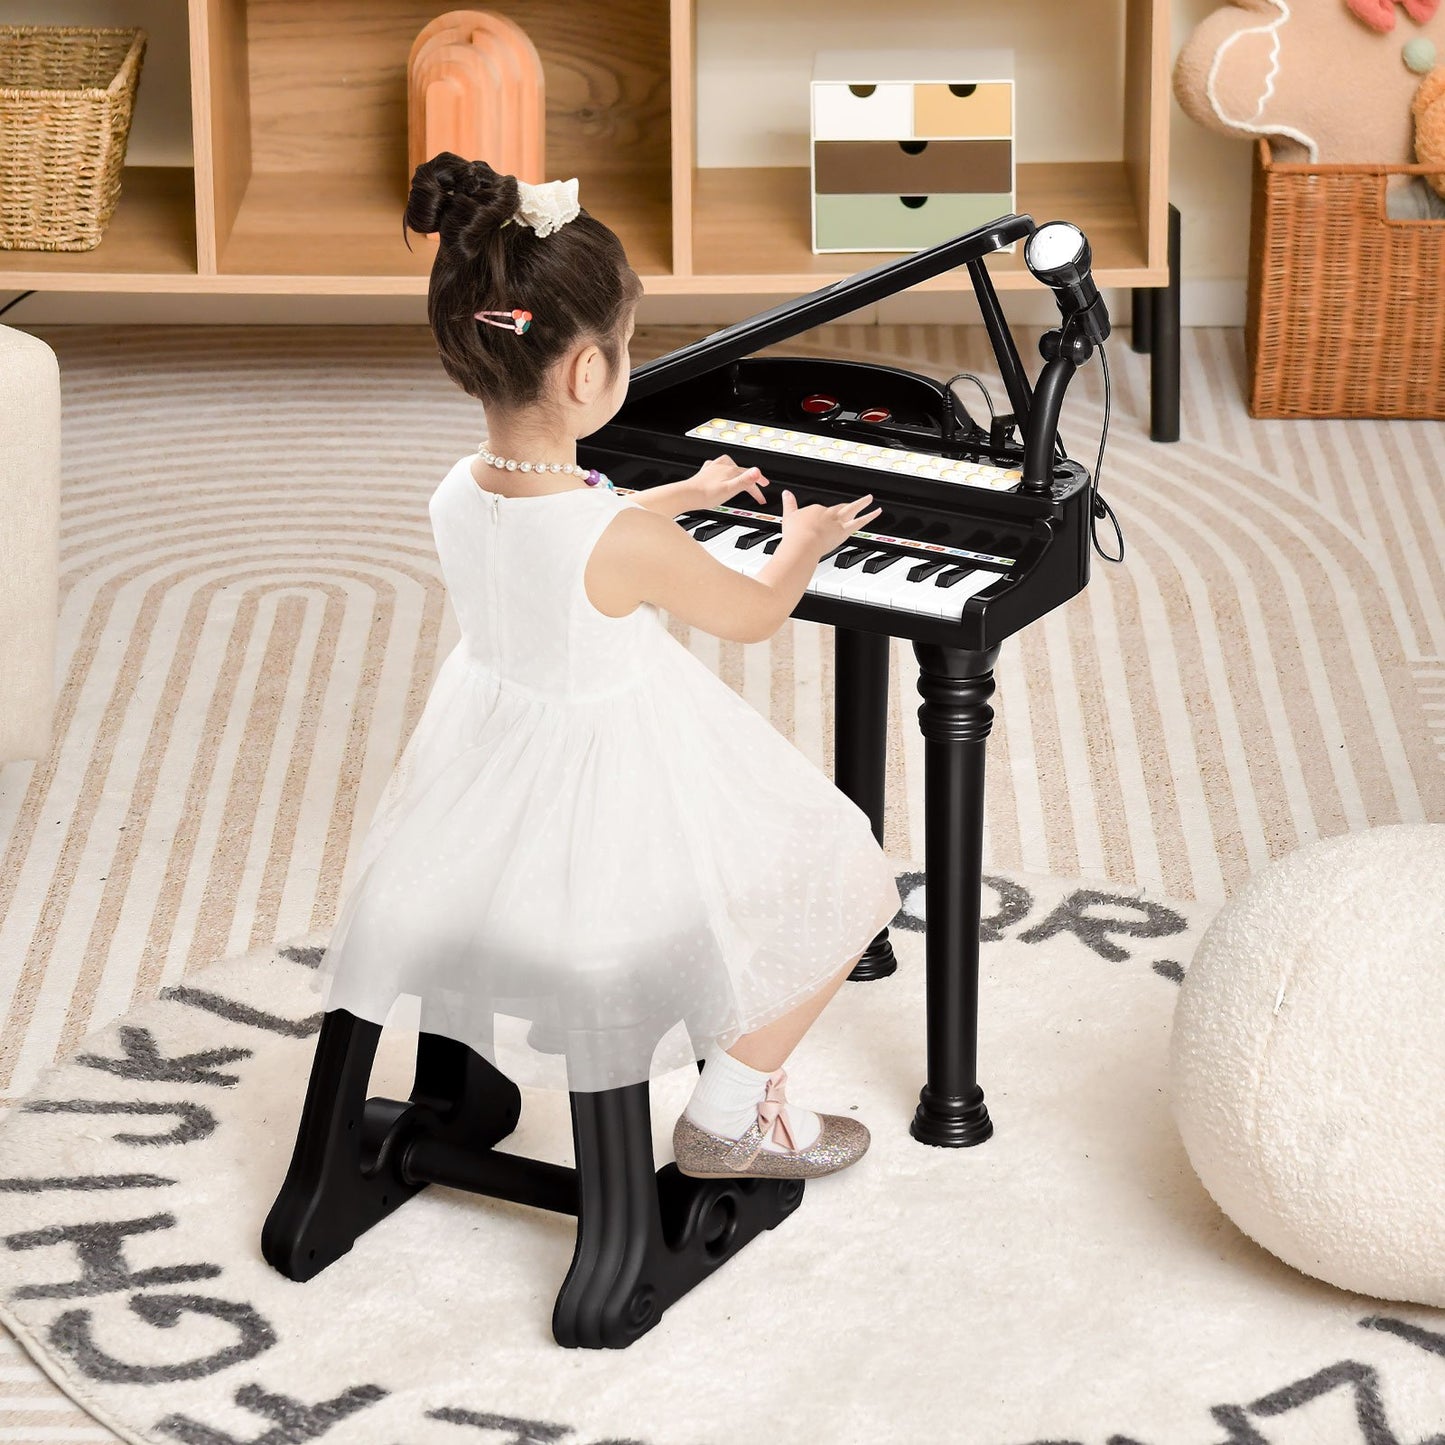 31 Keys Kids Piano Keyboard with Stool and Piano Lid, Black